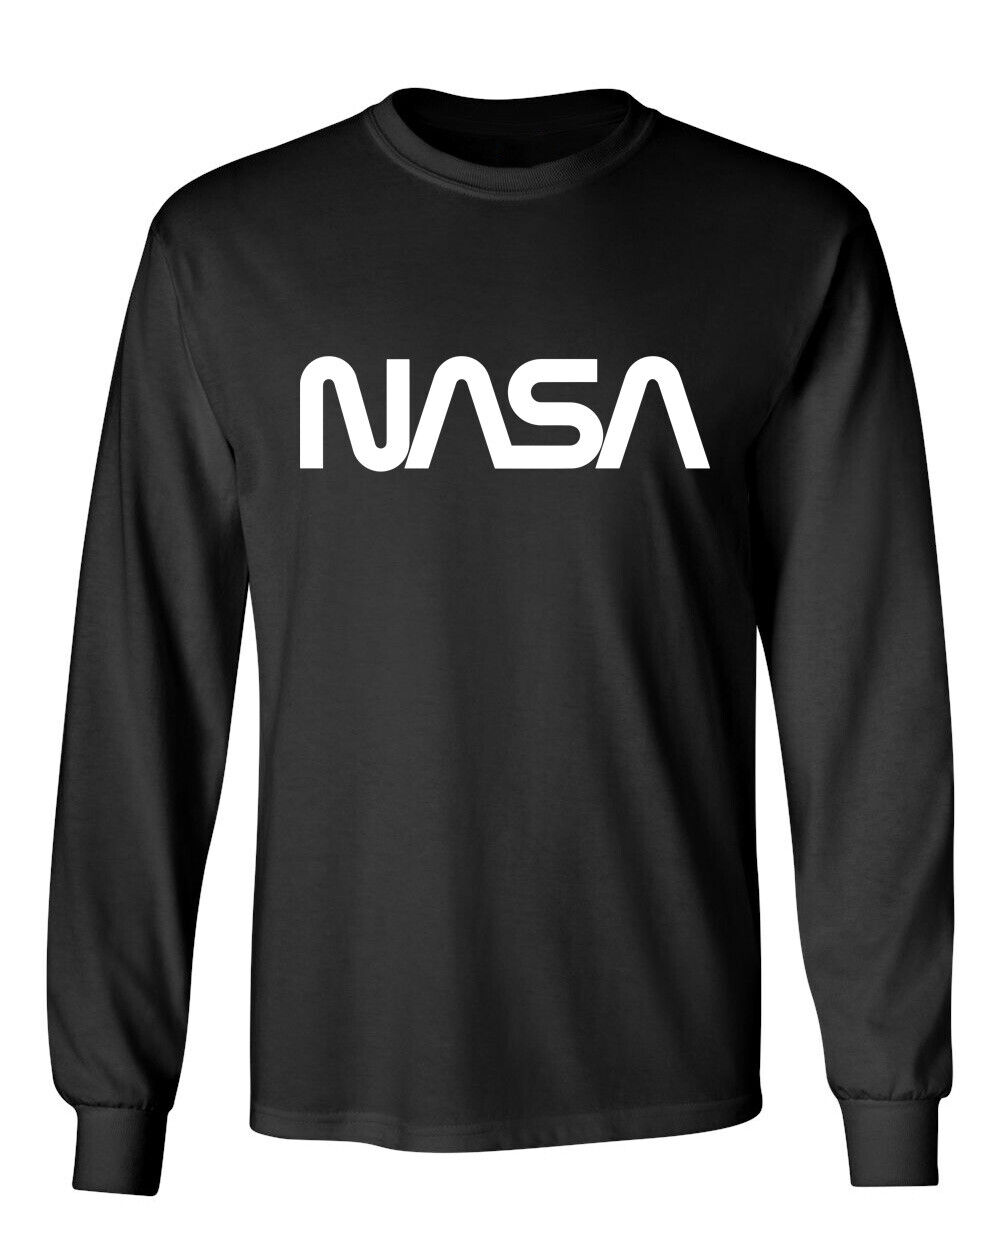 NASA Official Worm Logo Novelty Graphic Sarcastic Humor Men's Long Sleeve Shirt